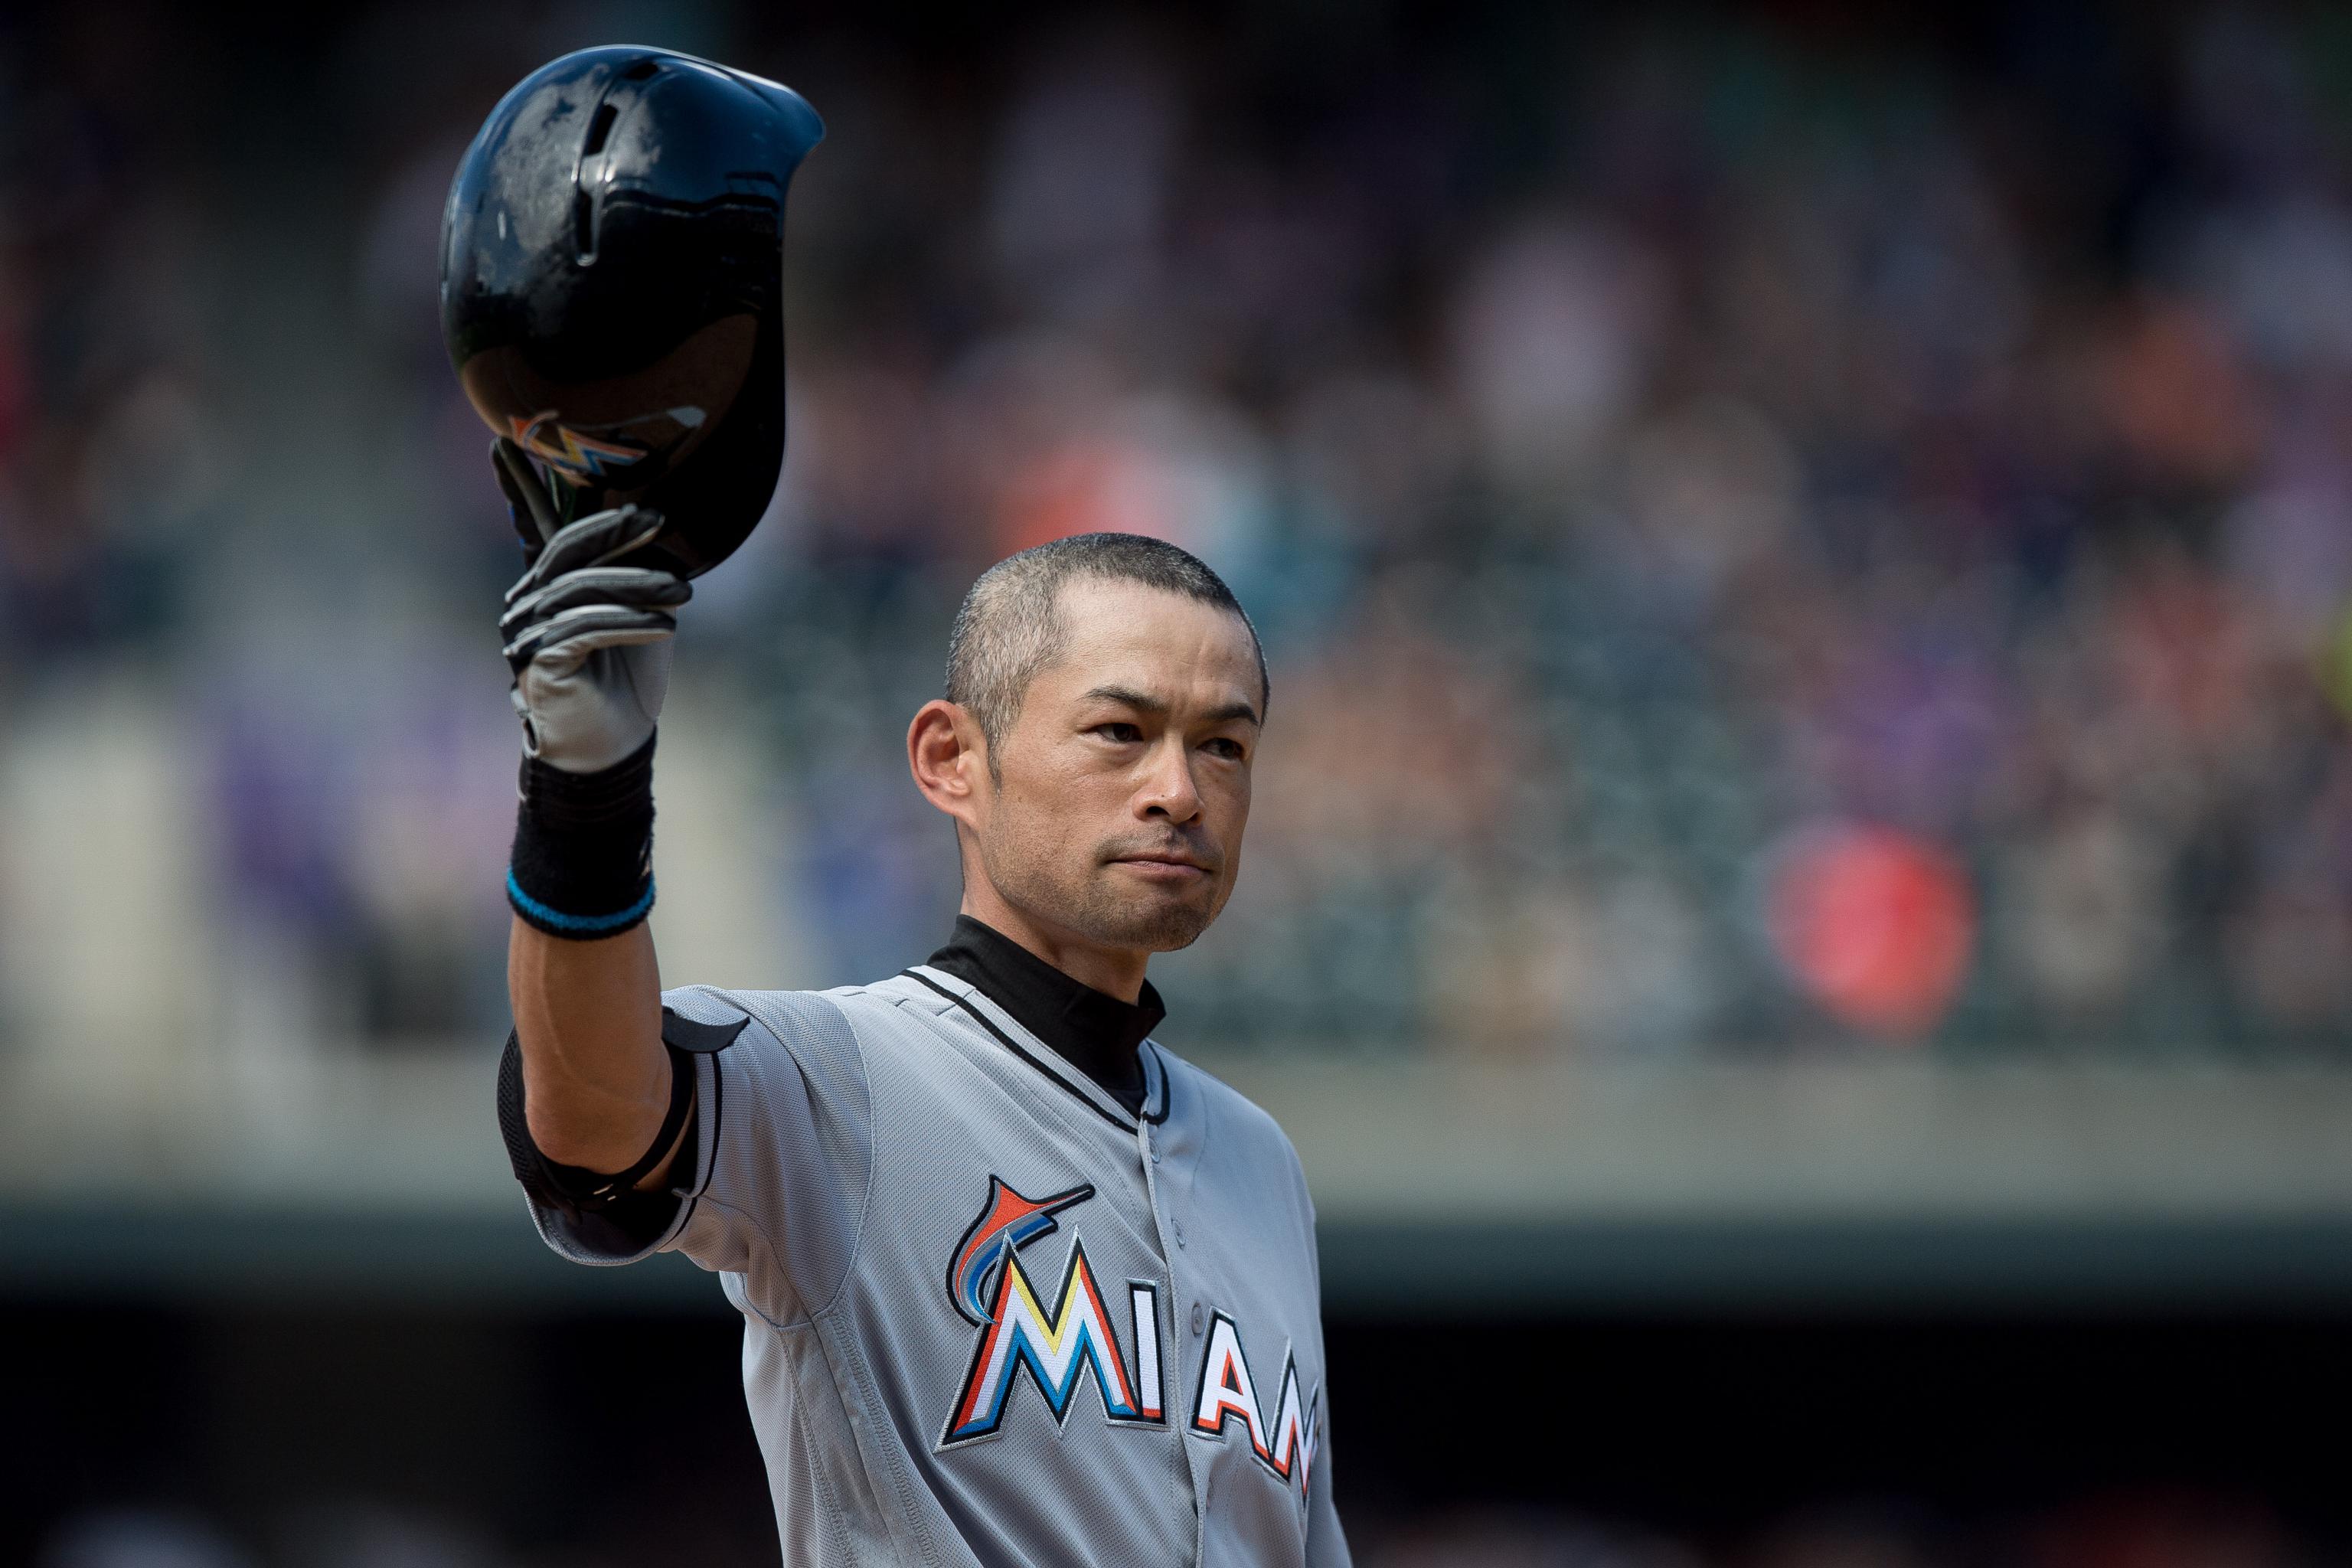 Ichiro Suzuki Retires - Inside the MLB Star's Stats, Teams & Career